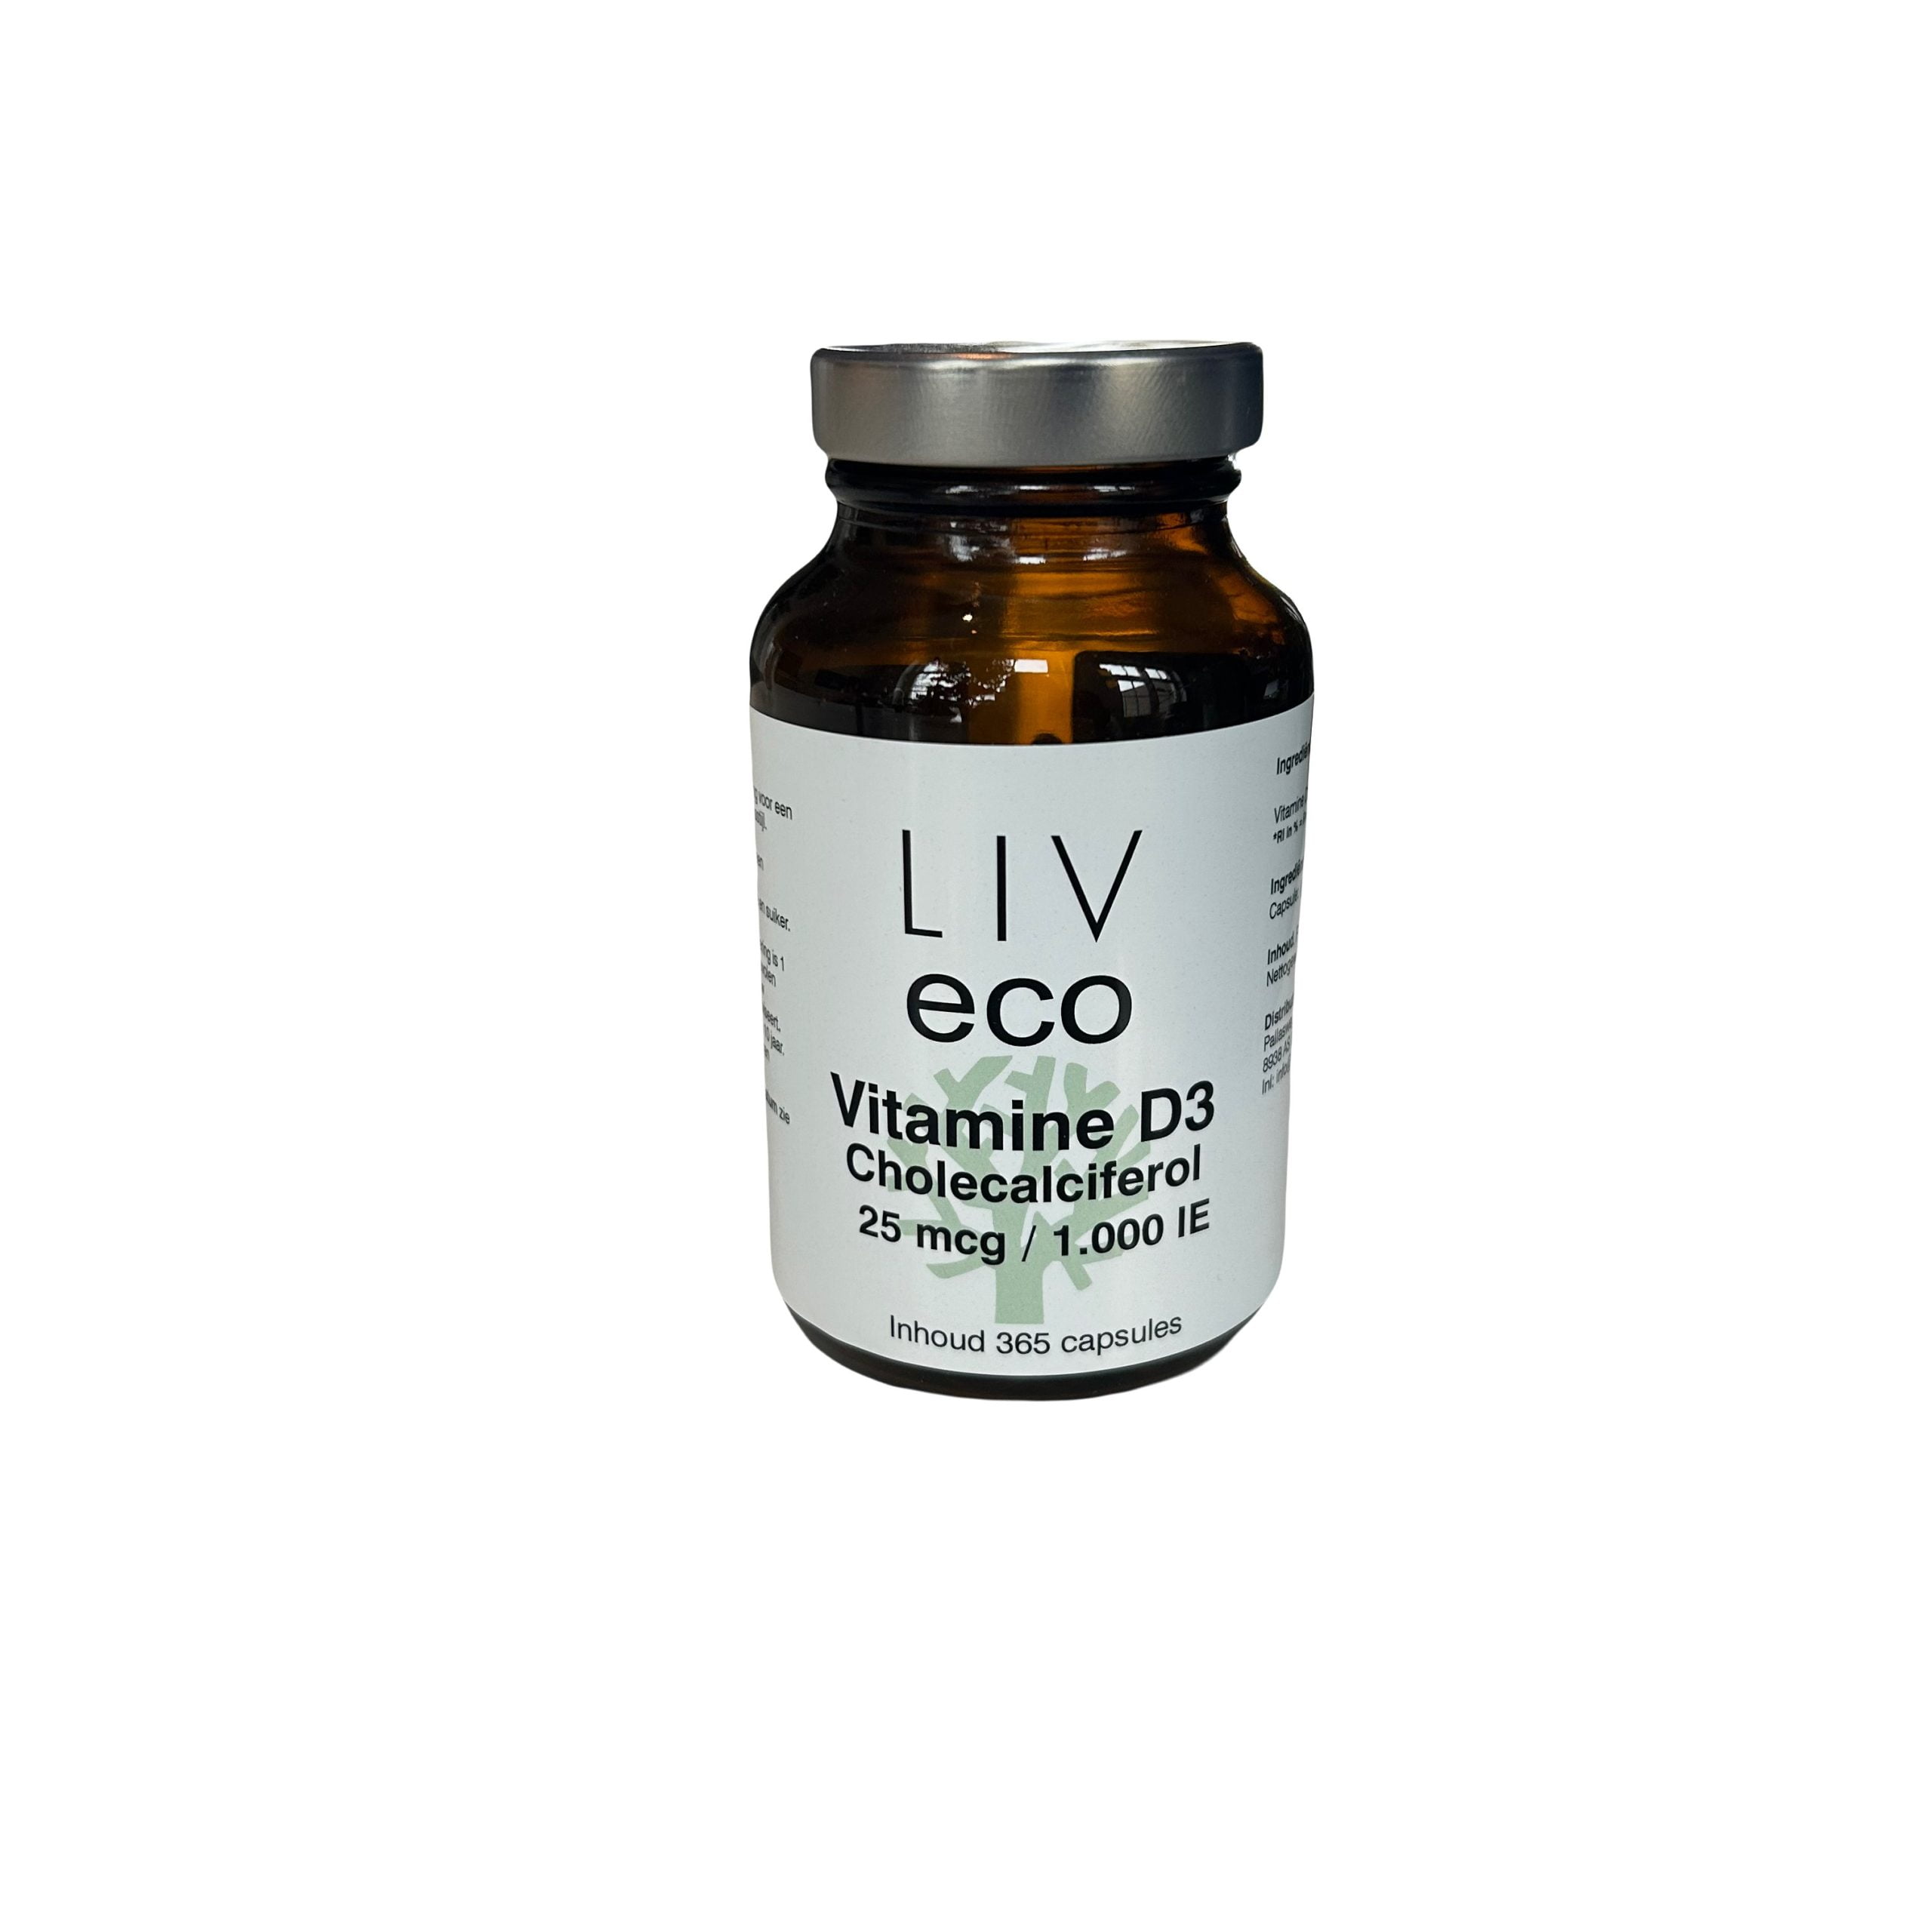 Vitamine D3 Cholecalciferol 25 mcg – 1000 IE